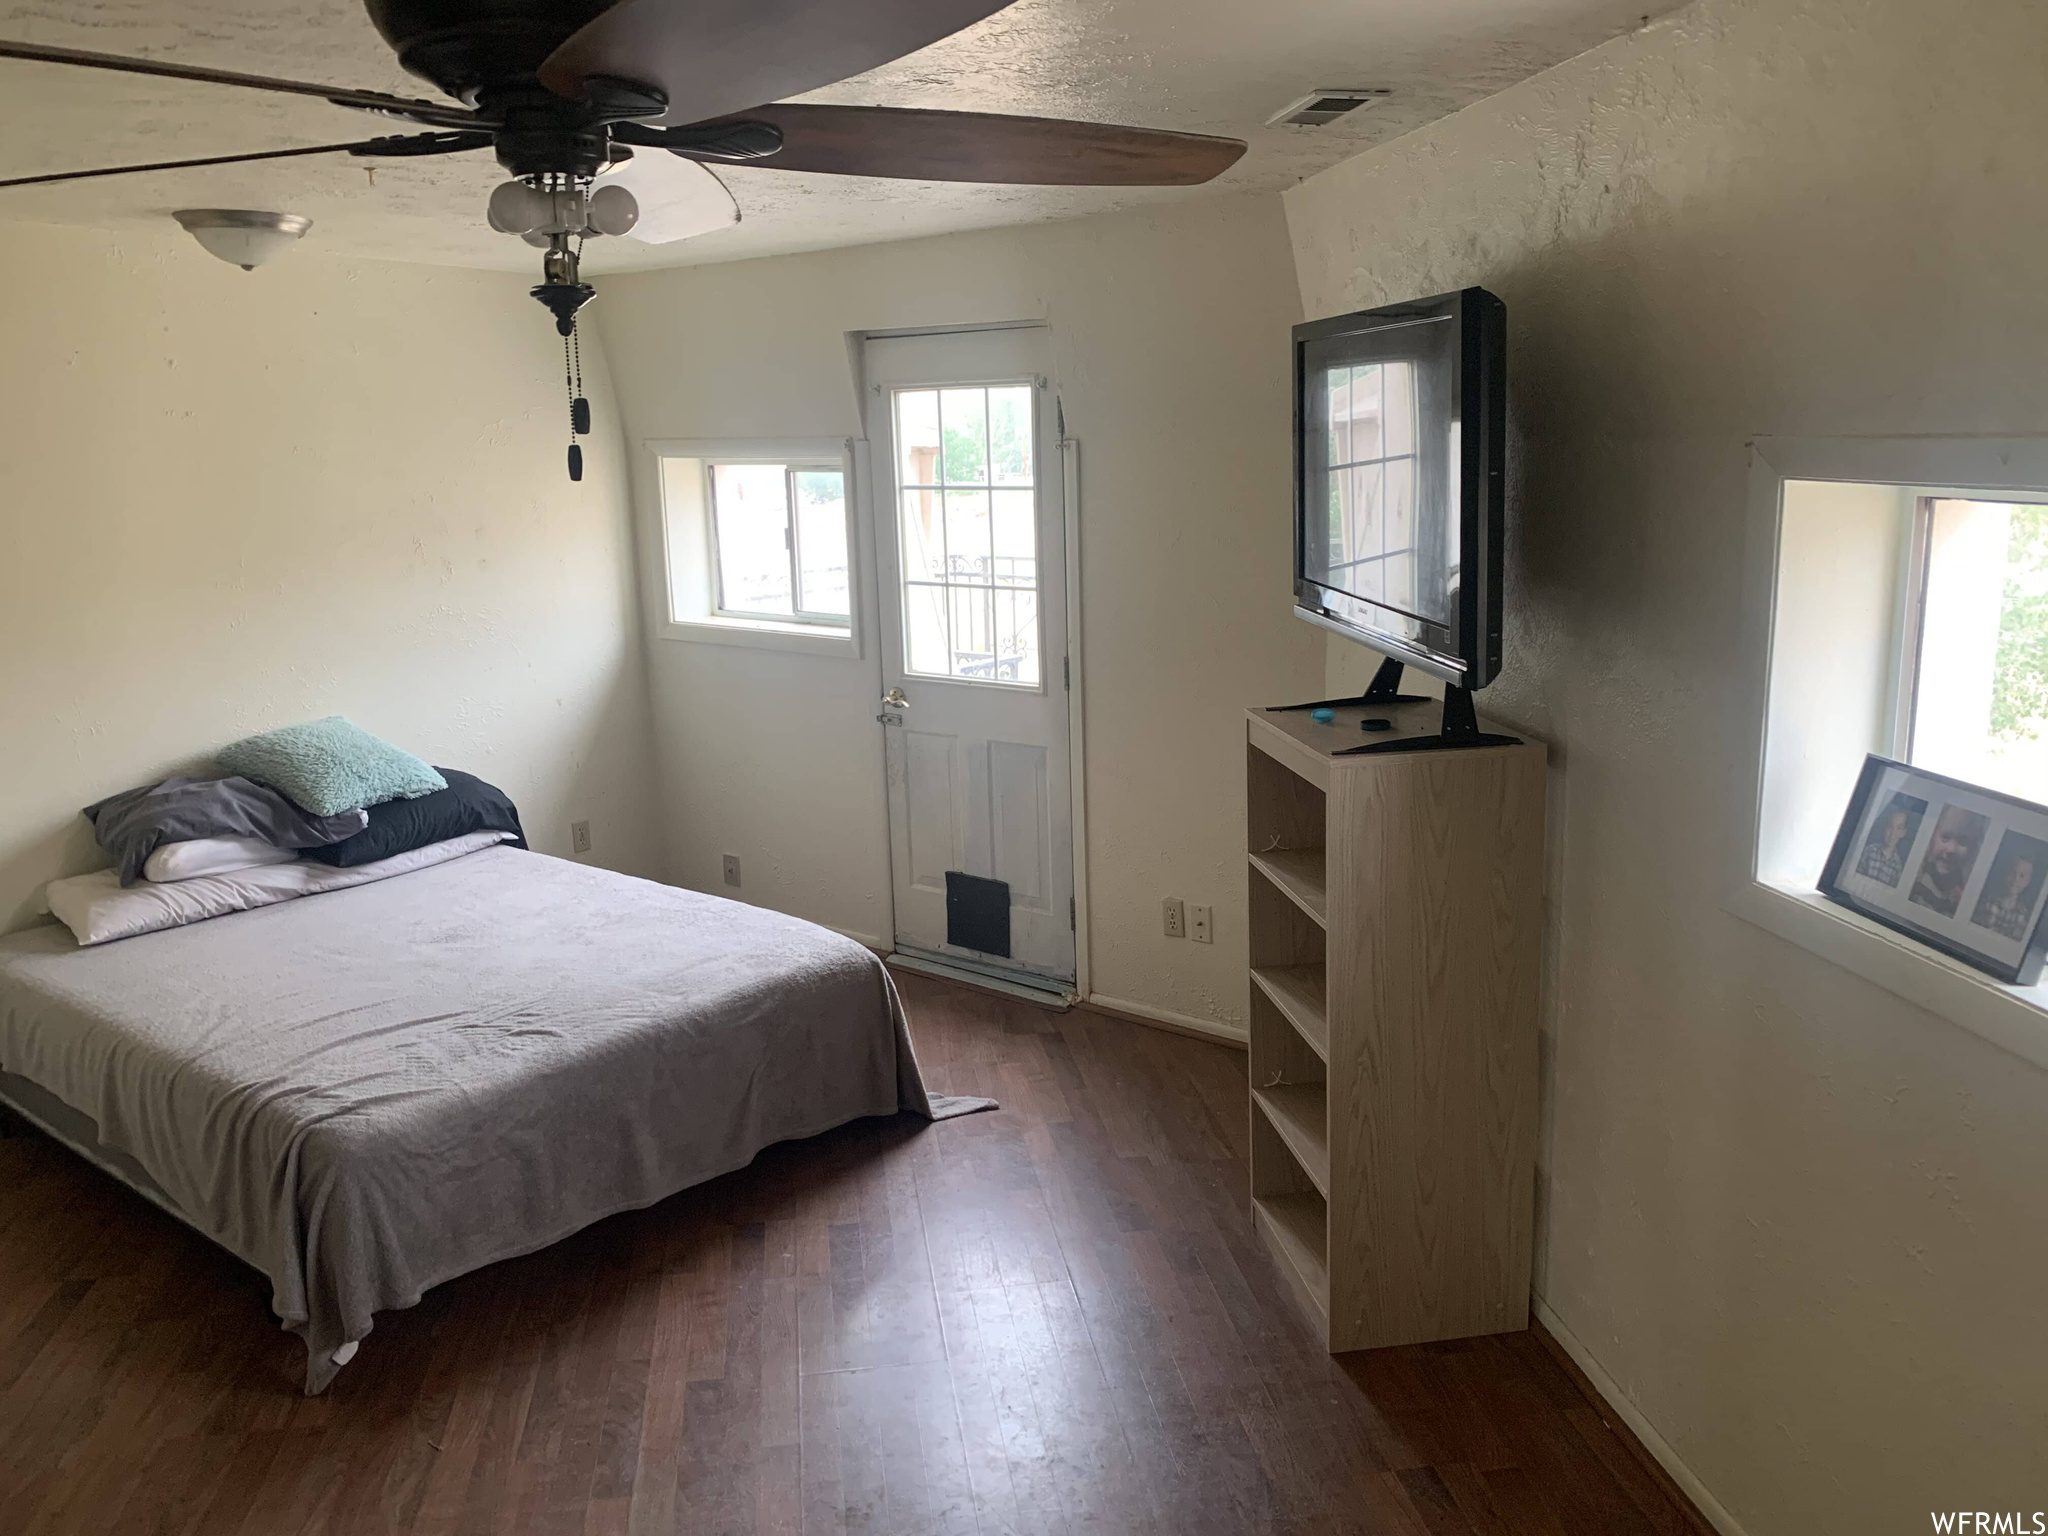 Bedroom featuring dark hardwood flooring and ceiling fan